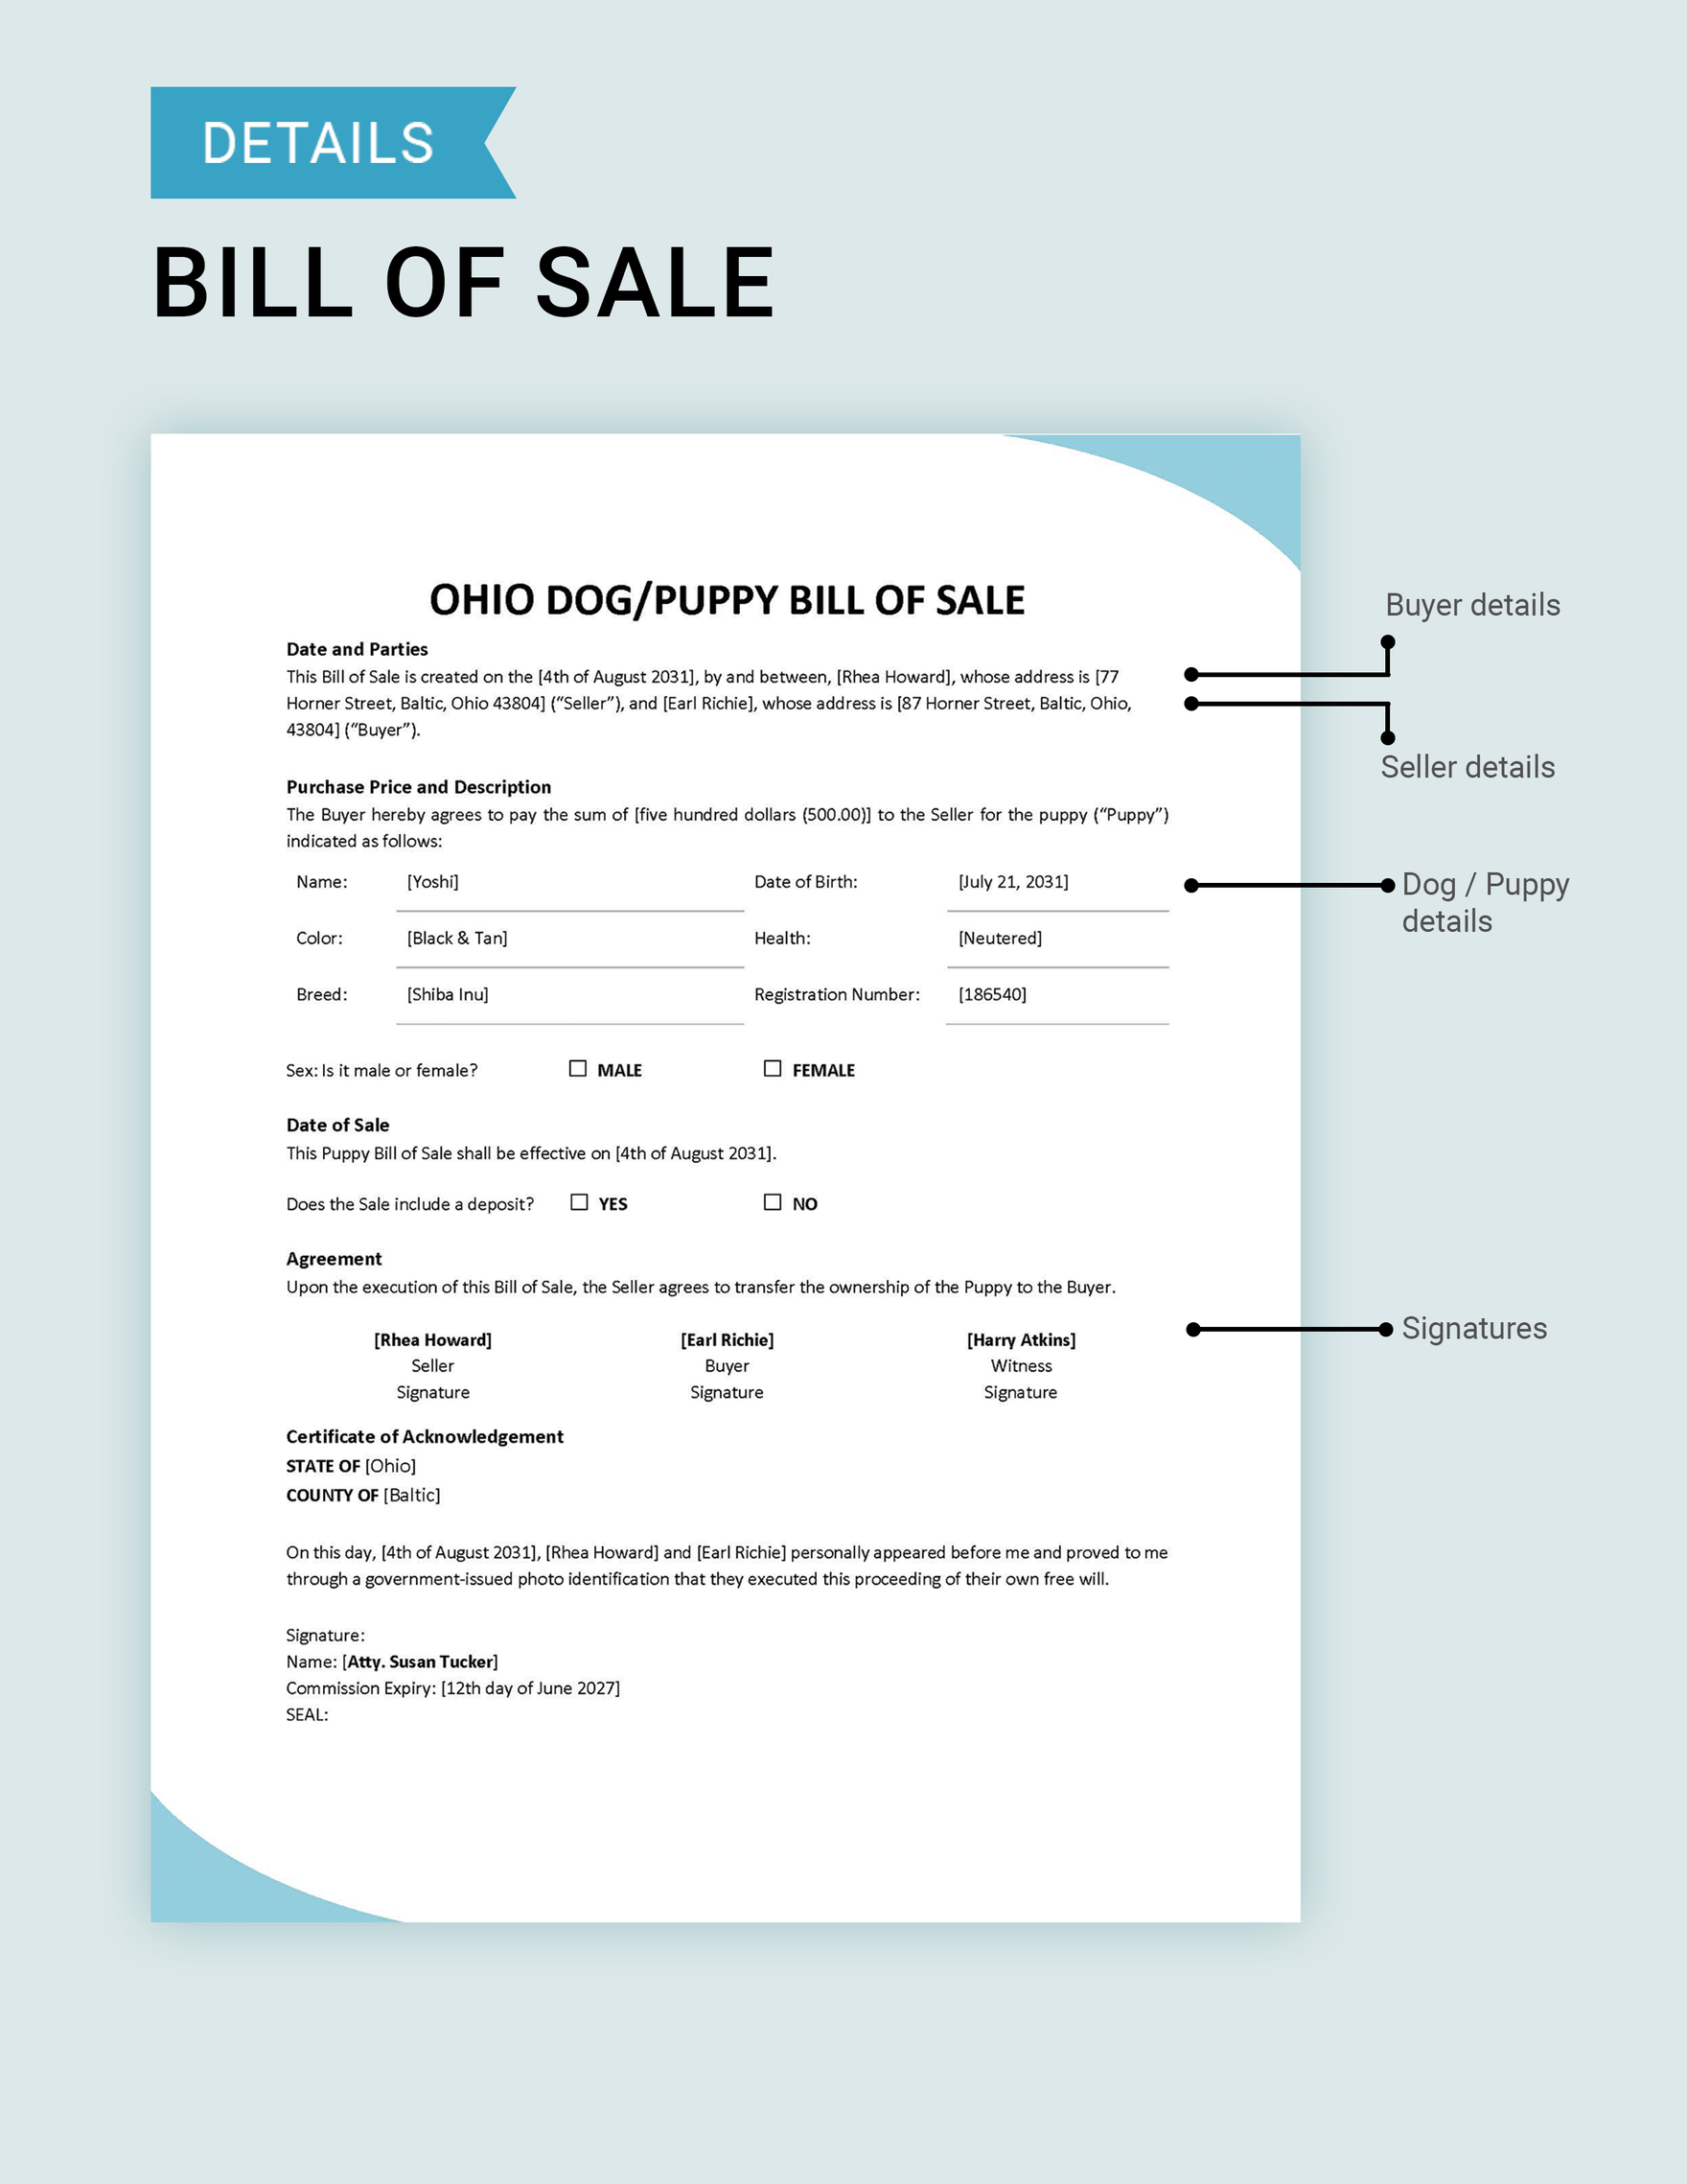 Ohio Dog / Puppy Bill of Sale Template